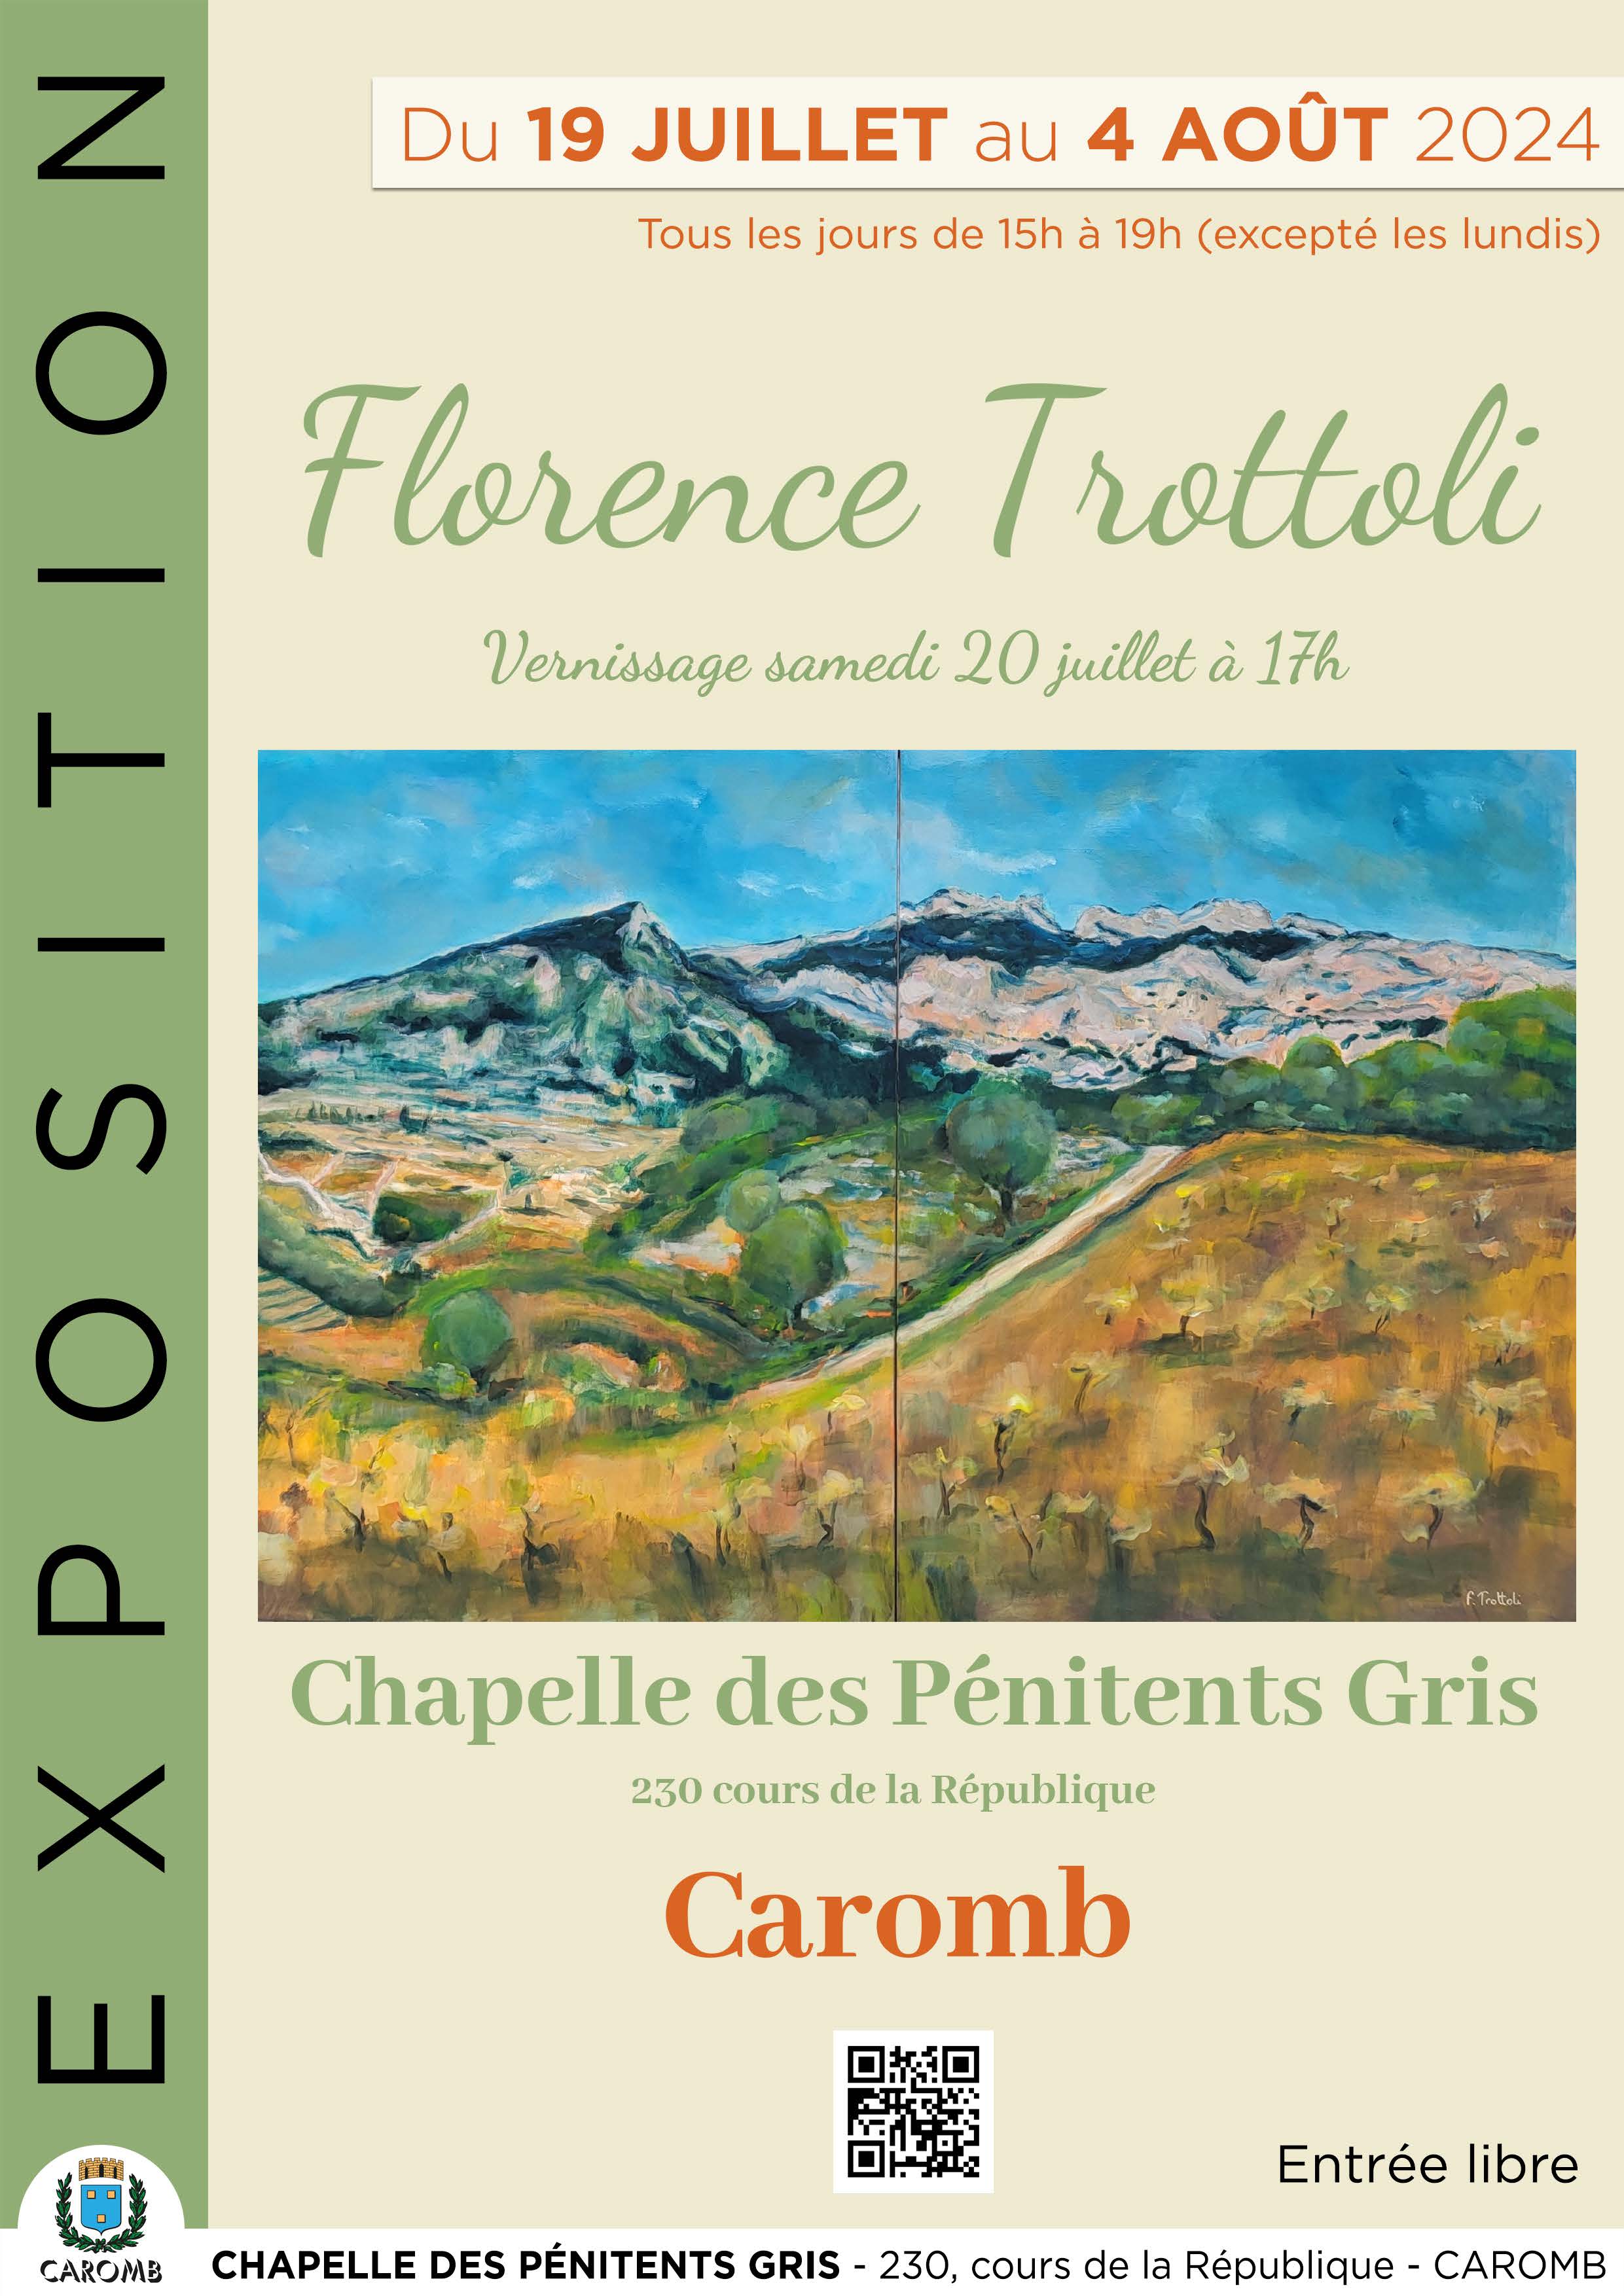 expo chapelle florence trottoli